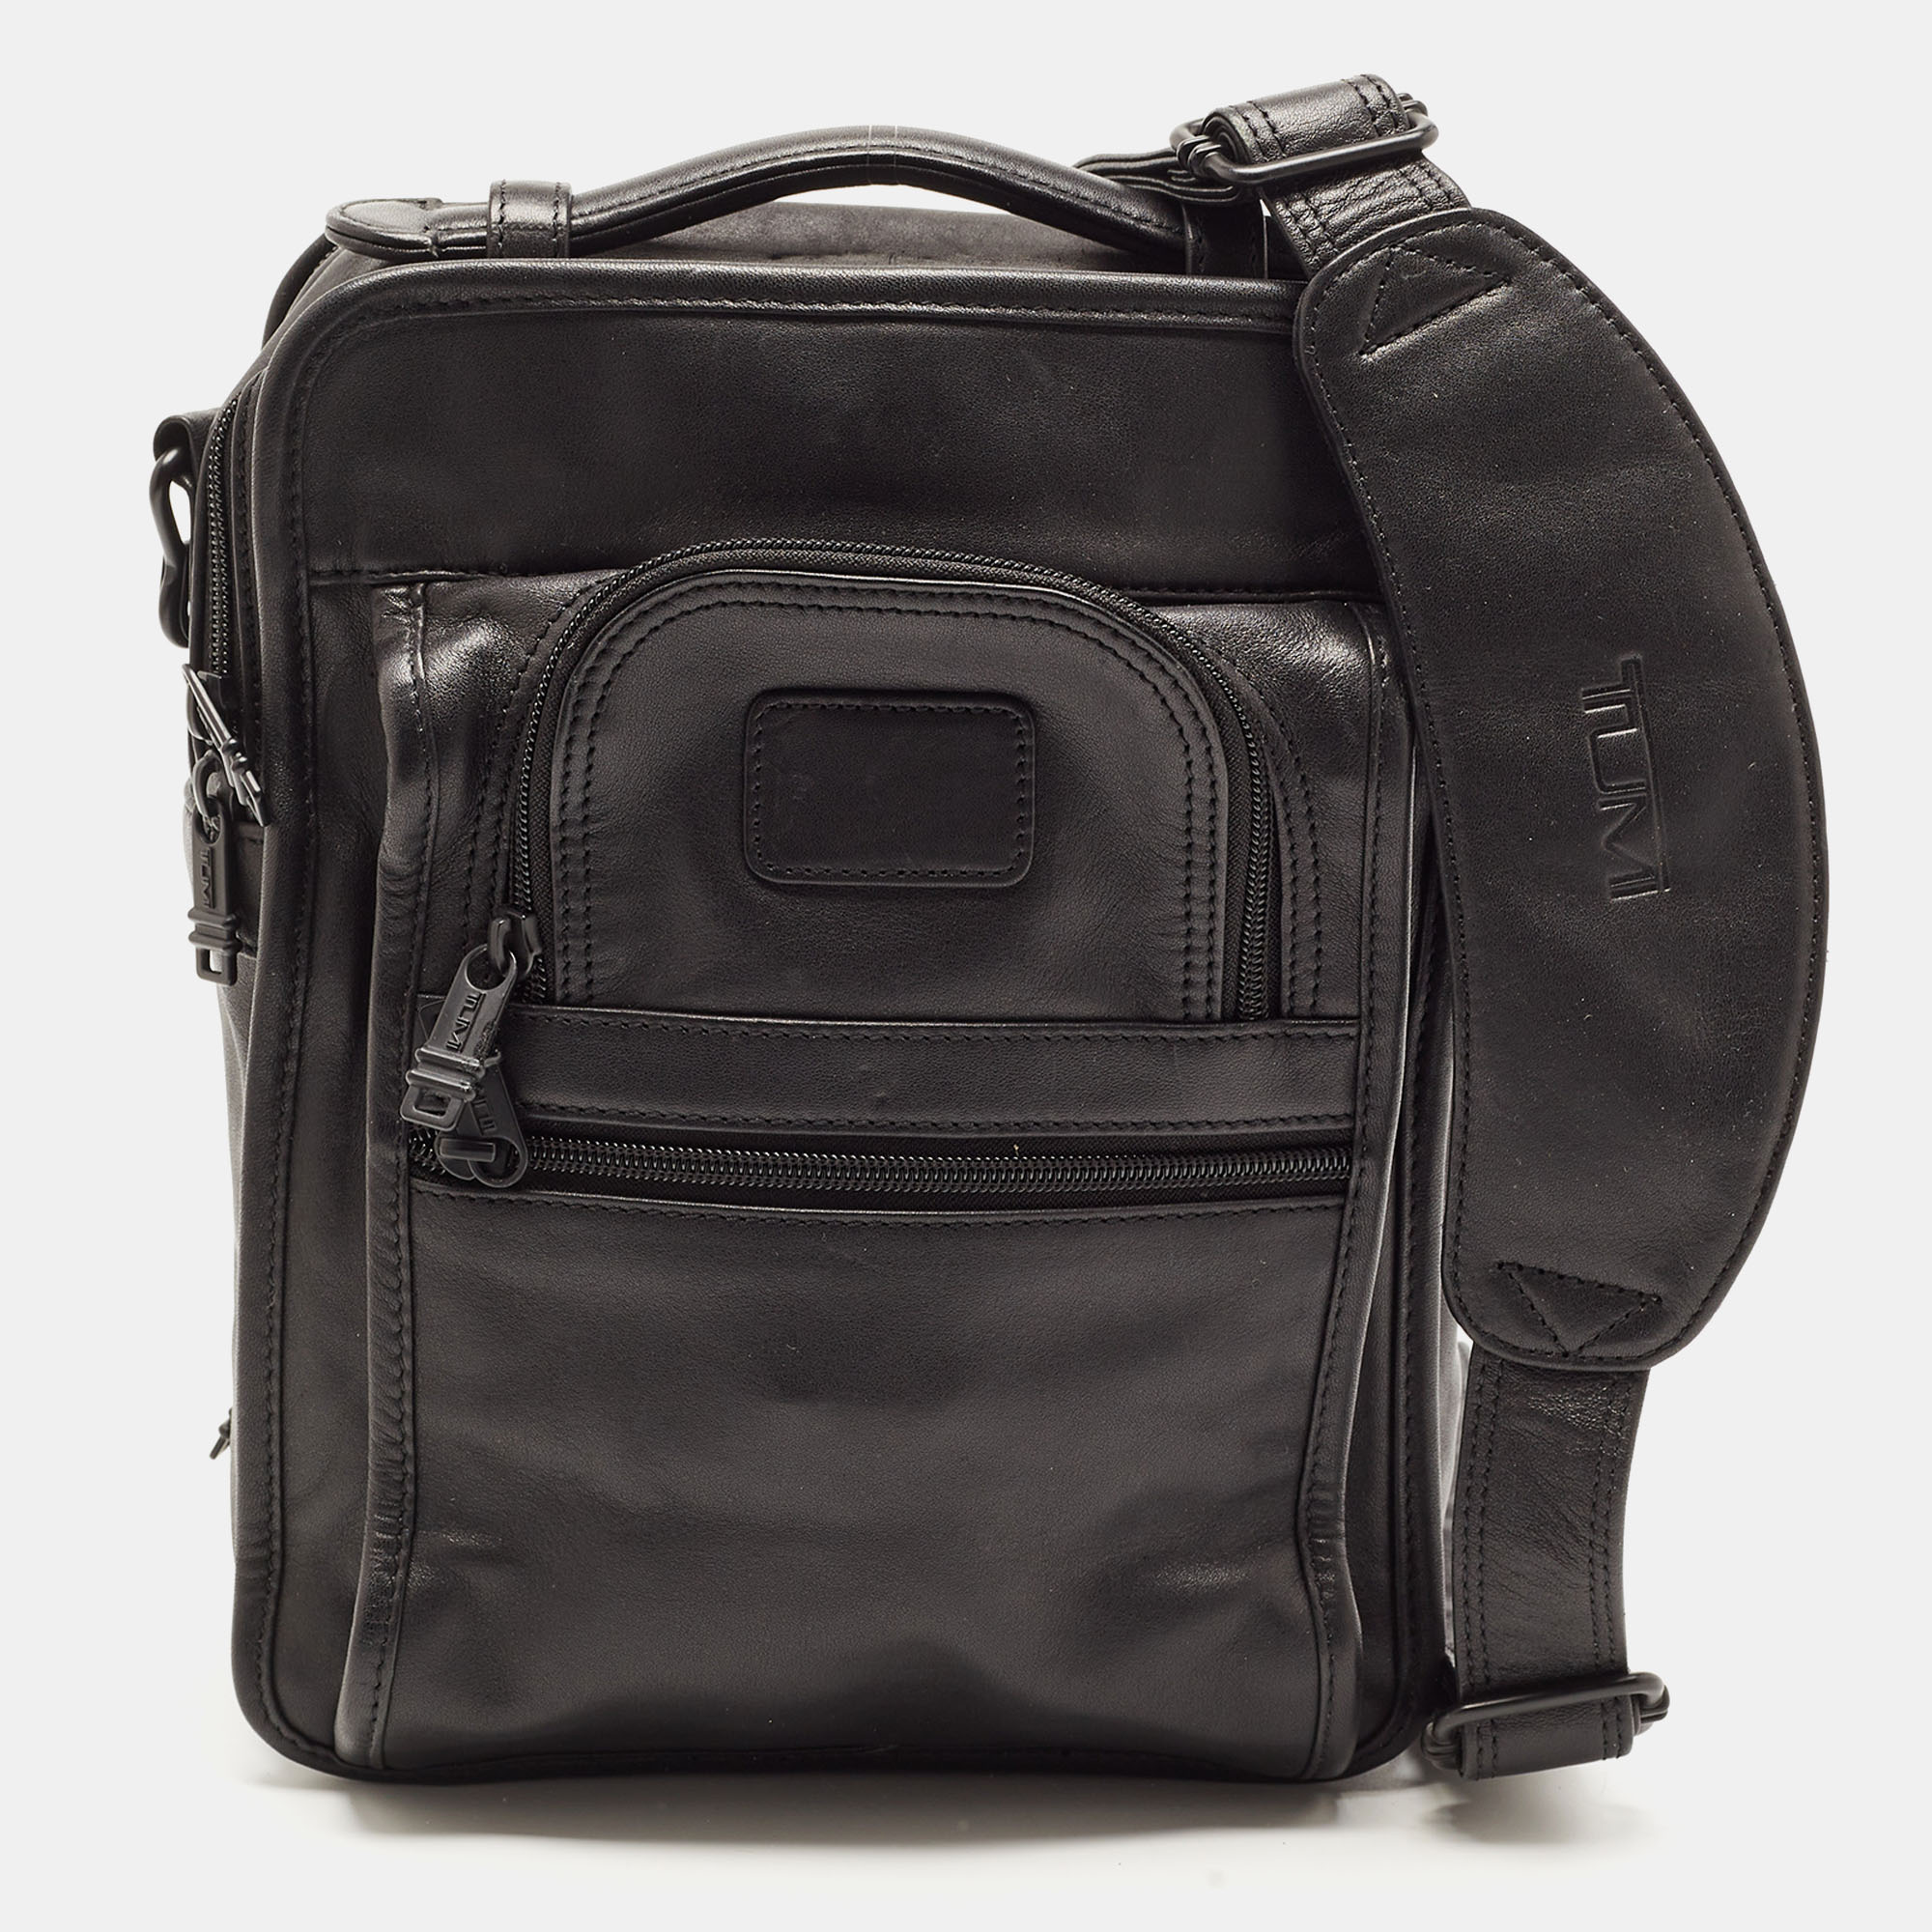 Tumi Black Leather Double Zip Messenger Bag